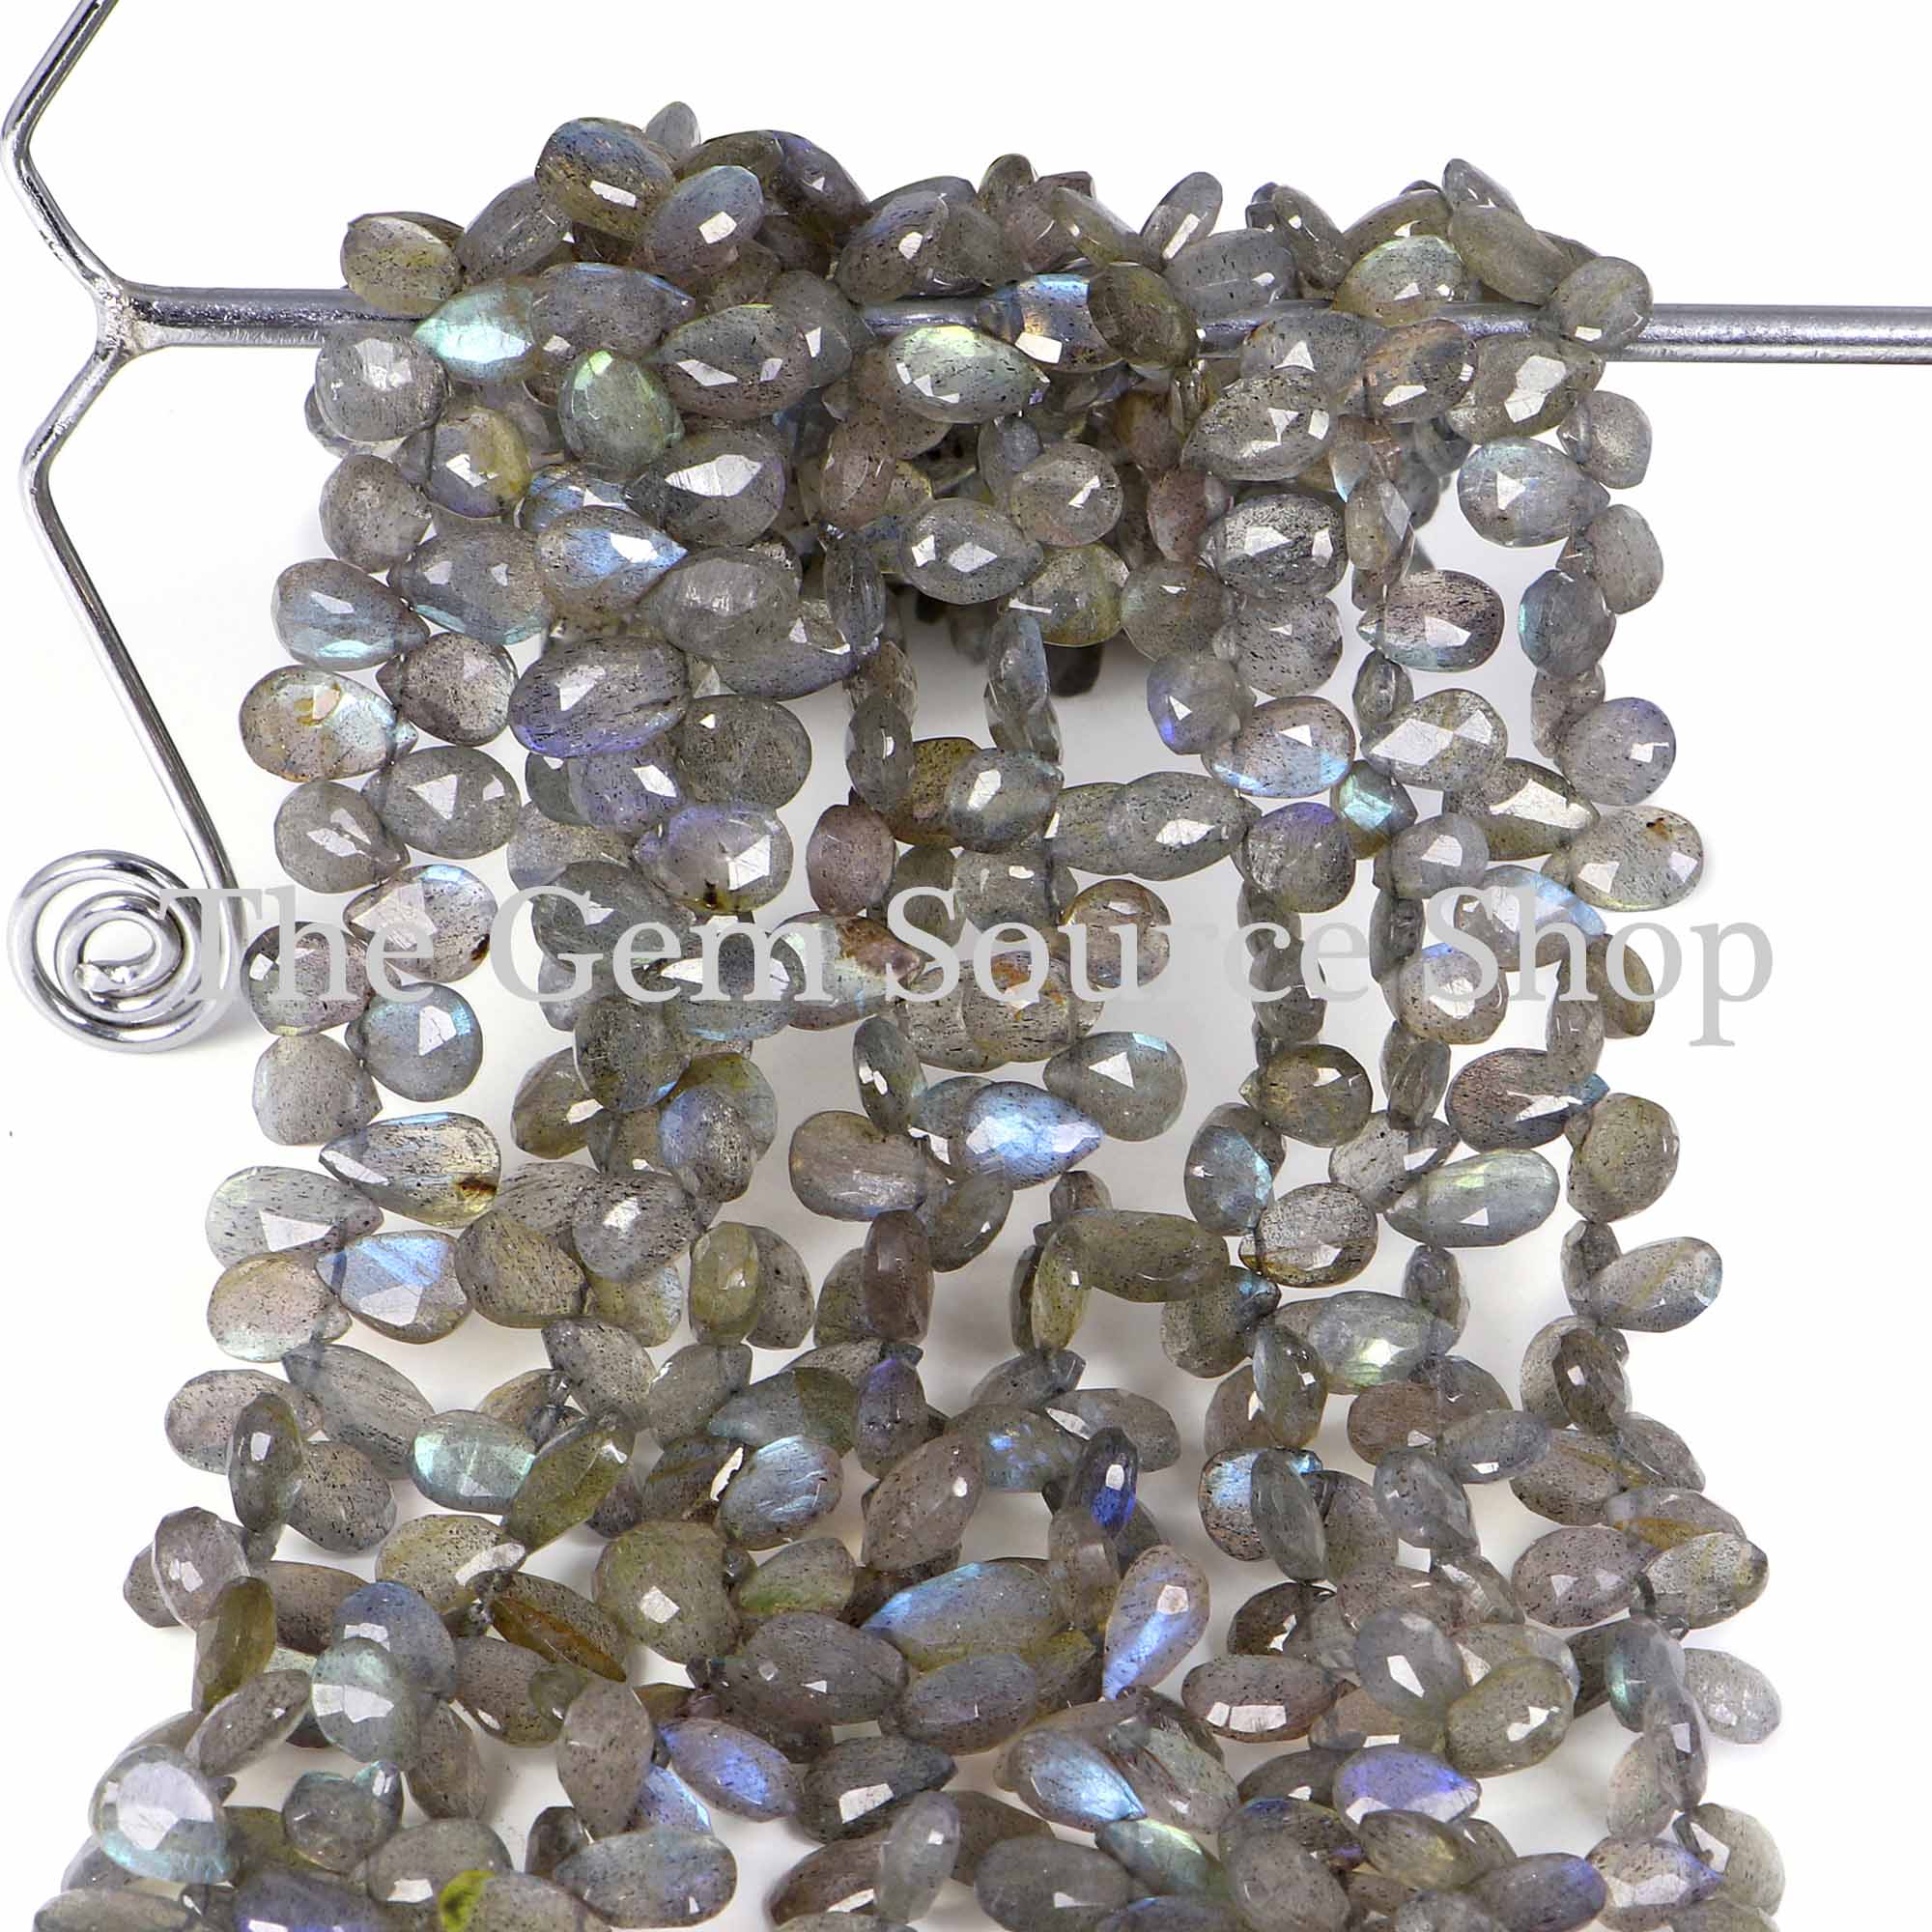 Wholesale Labradorite Beads, Labradorite Faceted Beads, Labradorite Pear Shape Beads, Gemstone Beads